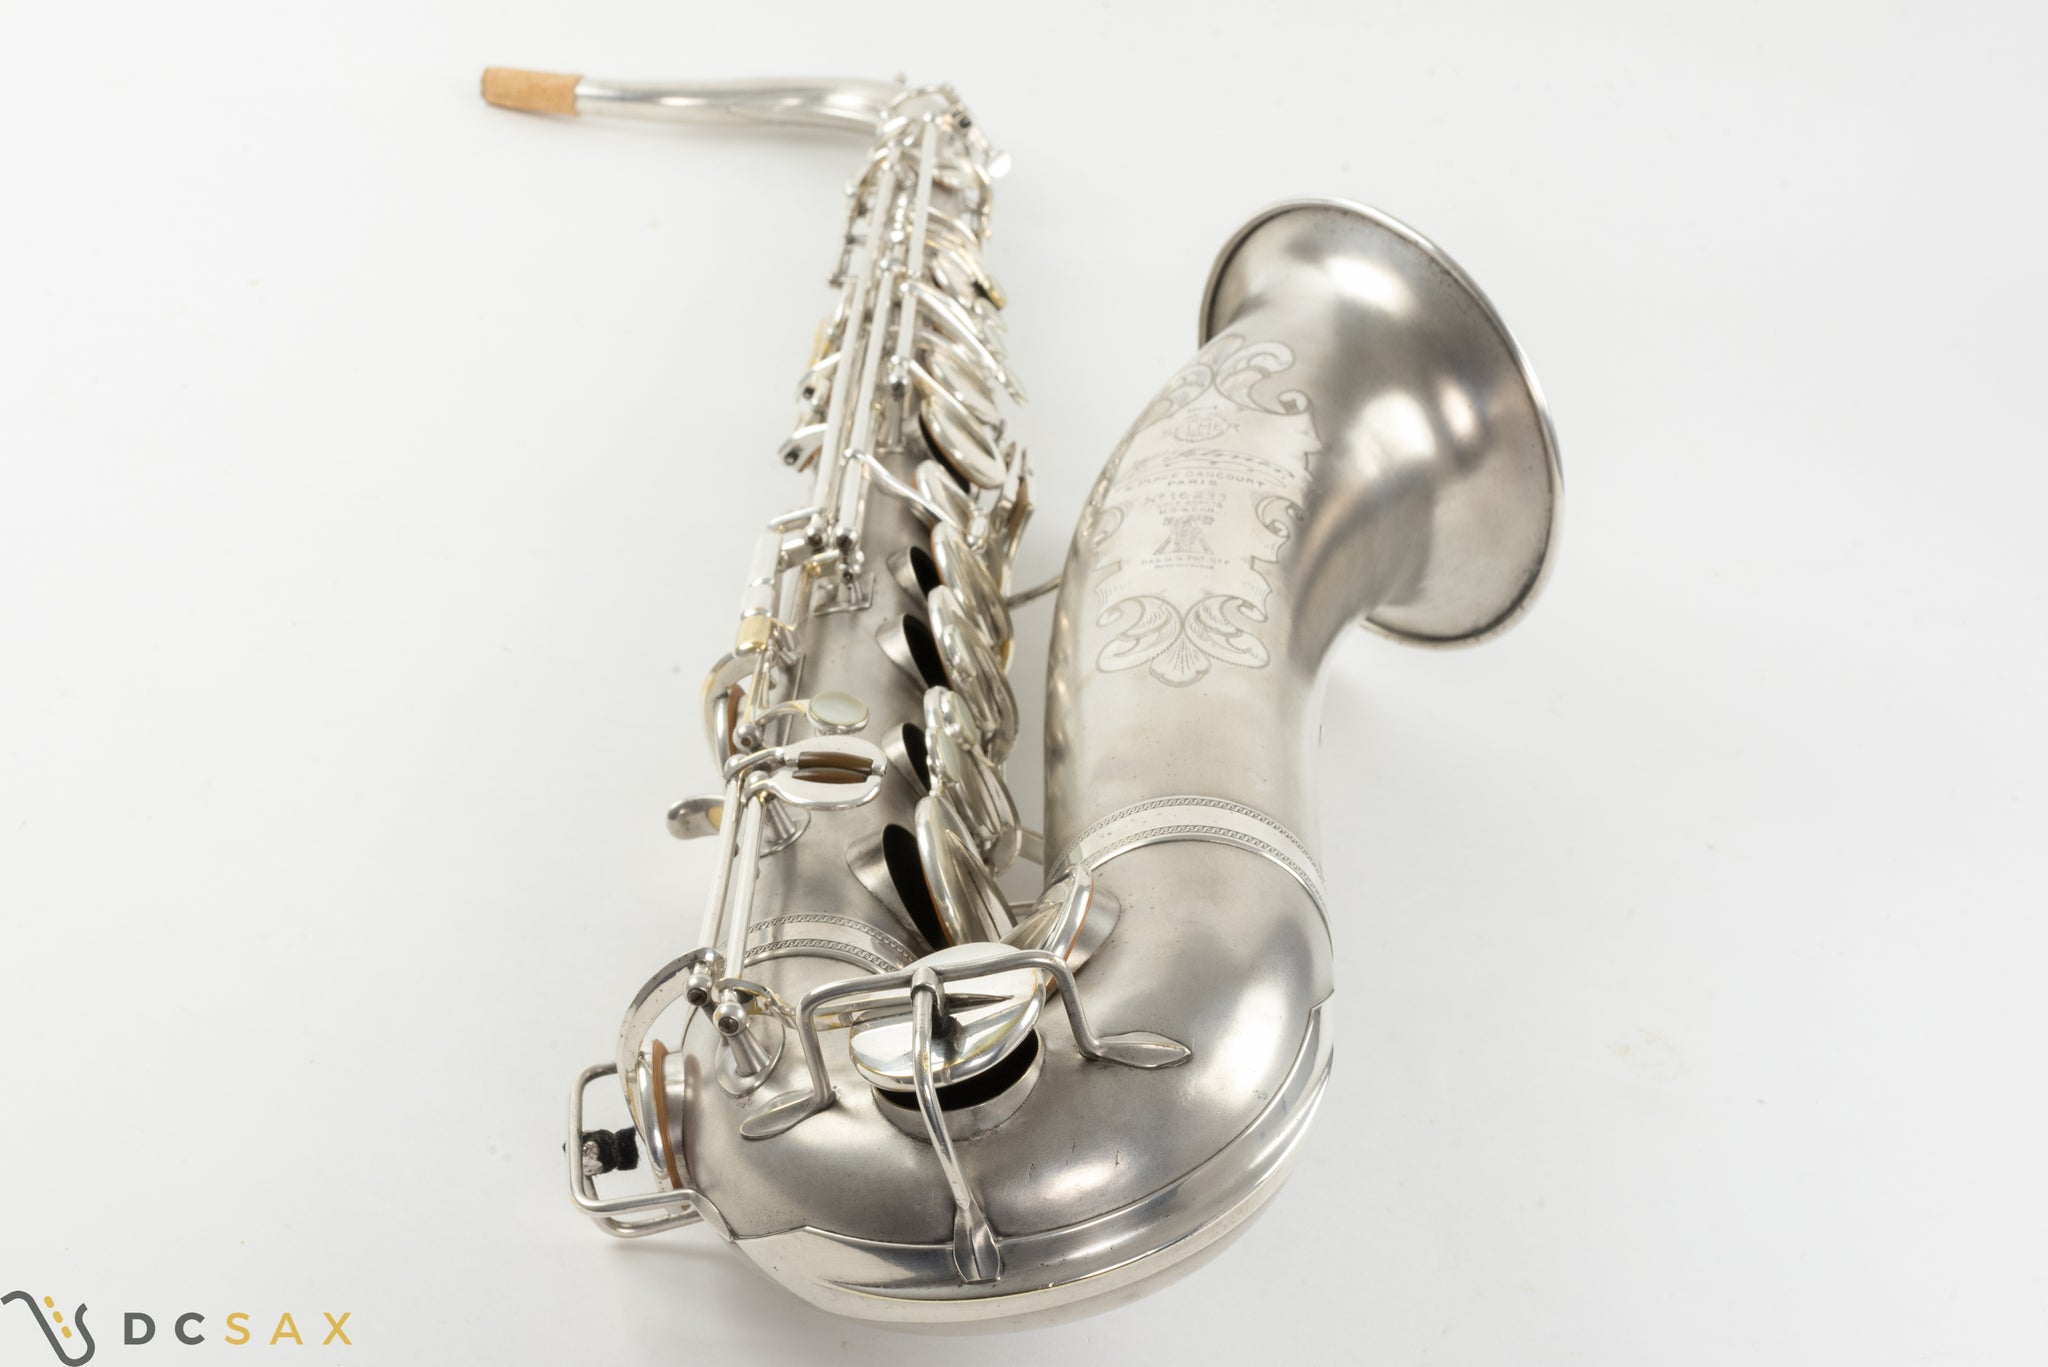 1932 Selmer Super Sax 'Cigar Cutter' Tenor Saxophone, Original Silver Plating, Fresh Overhaul